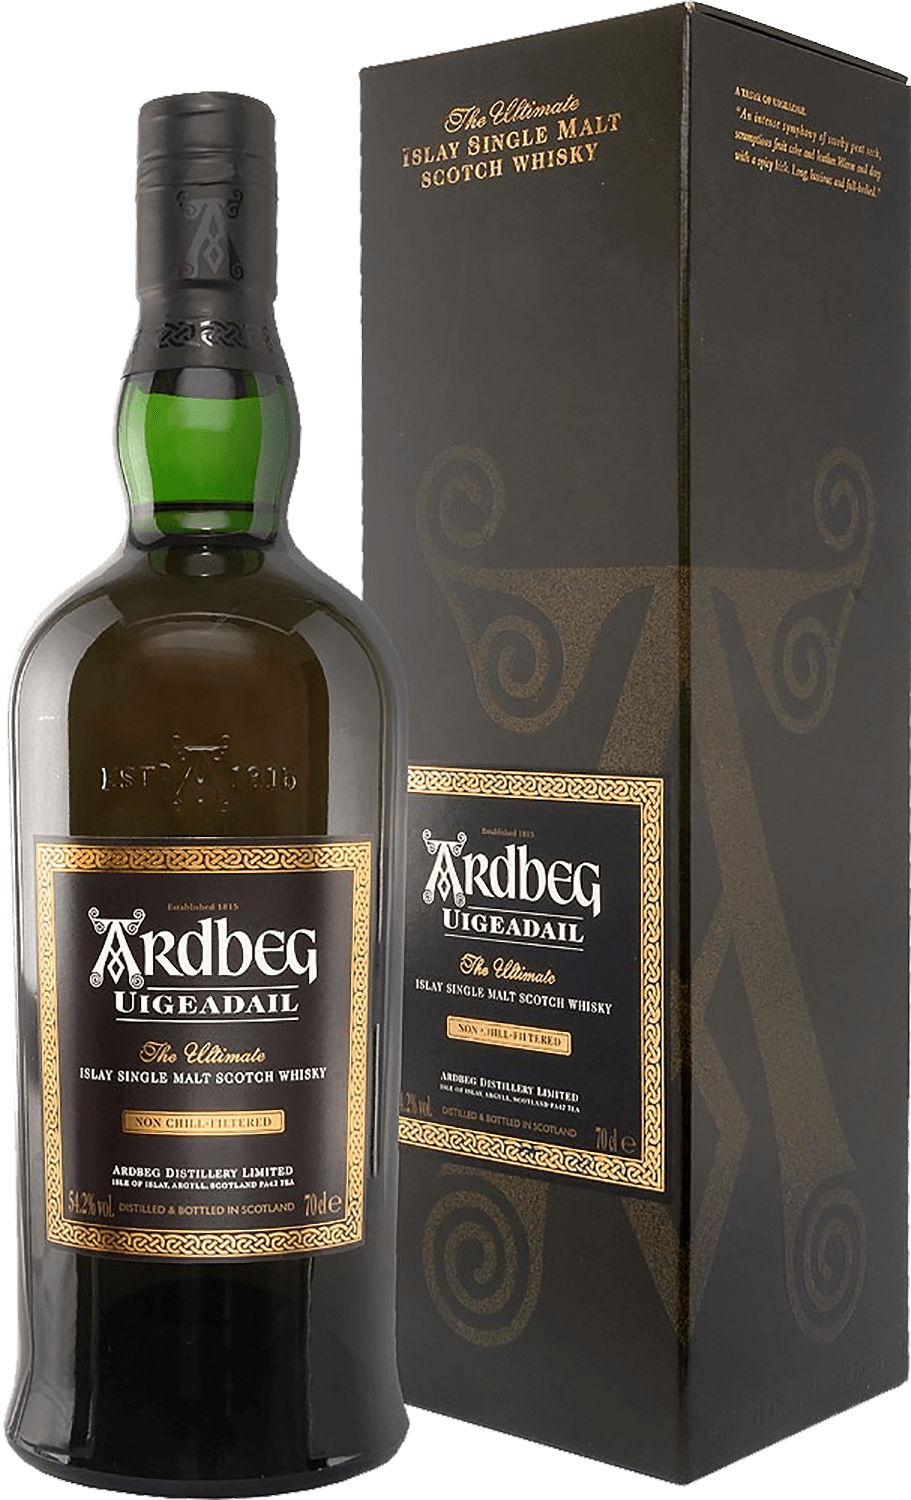 Ardbeg Uigeadail Single Malt Scotch Whisky glenfiddich malt master s edition single malt scotch whisky